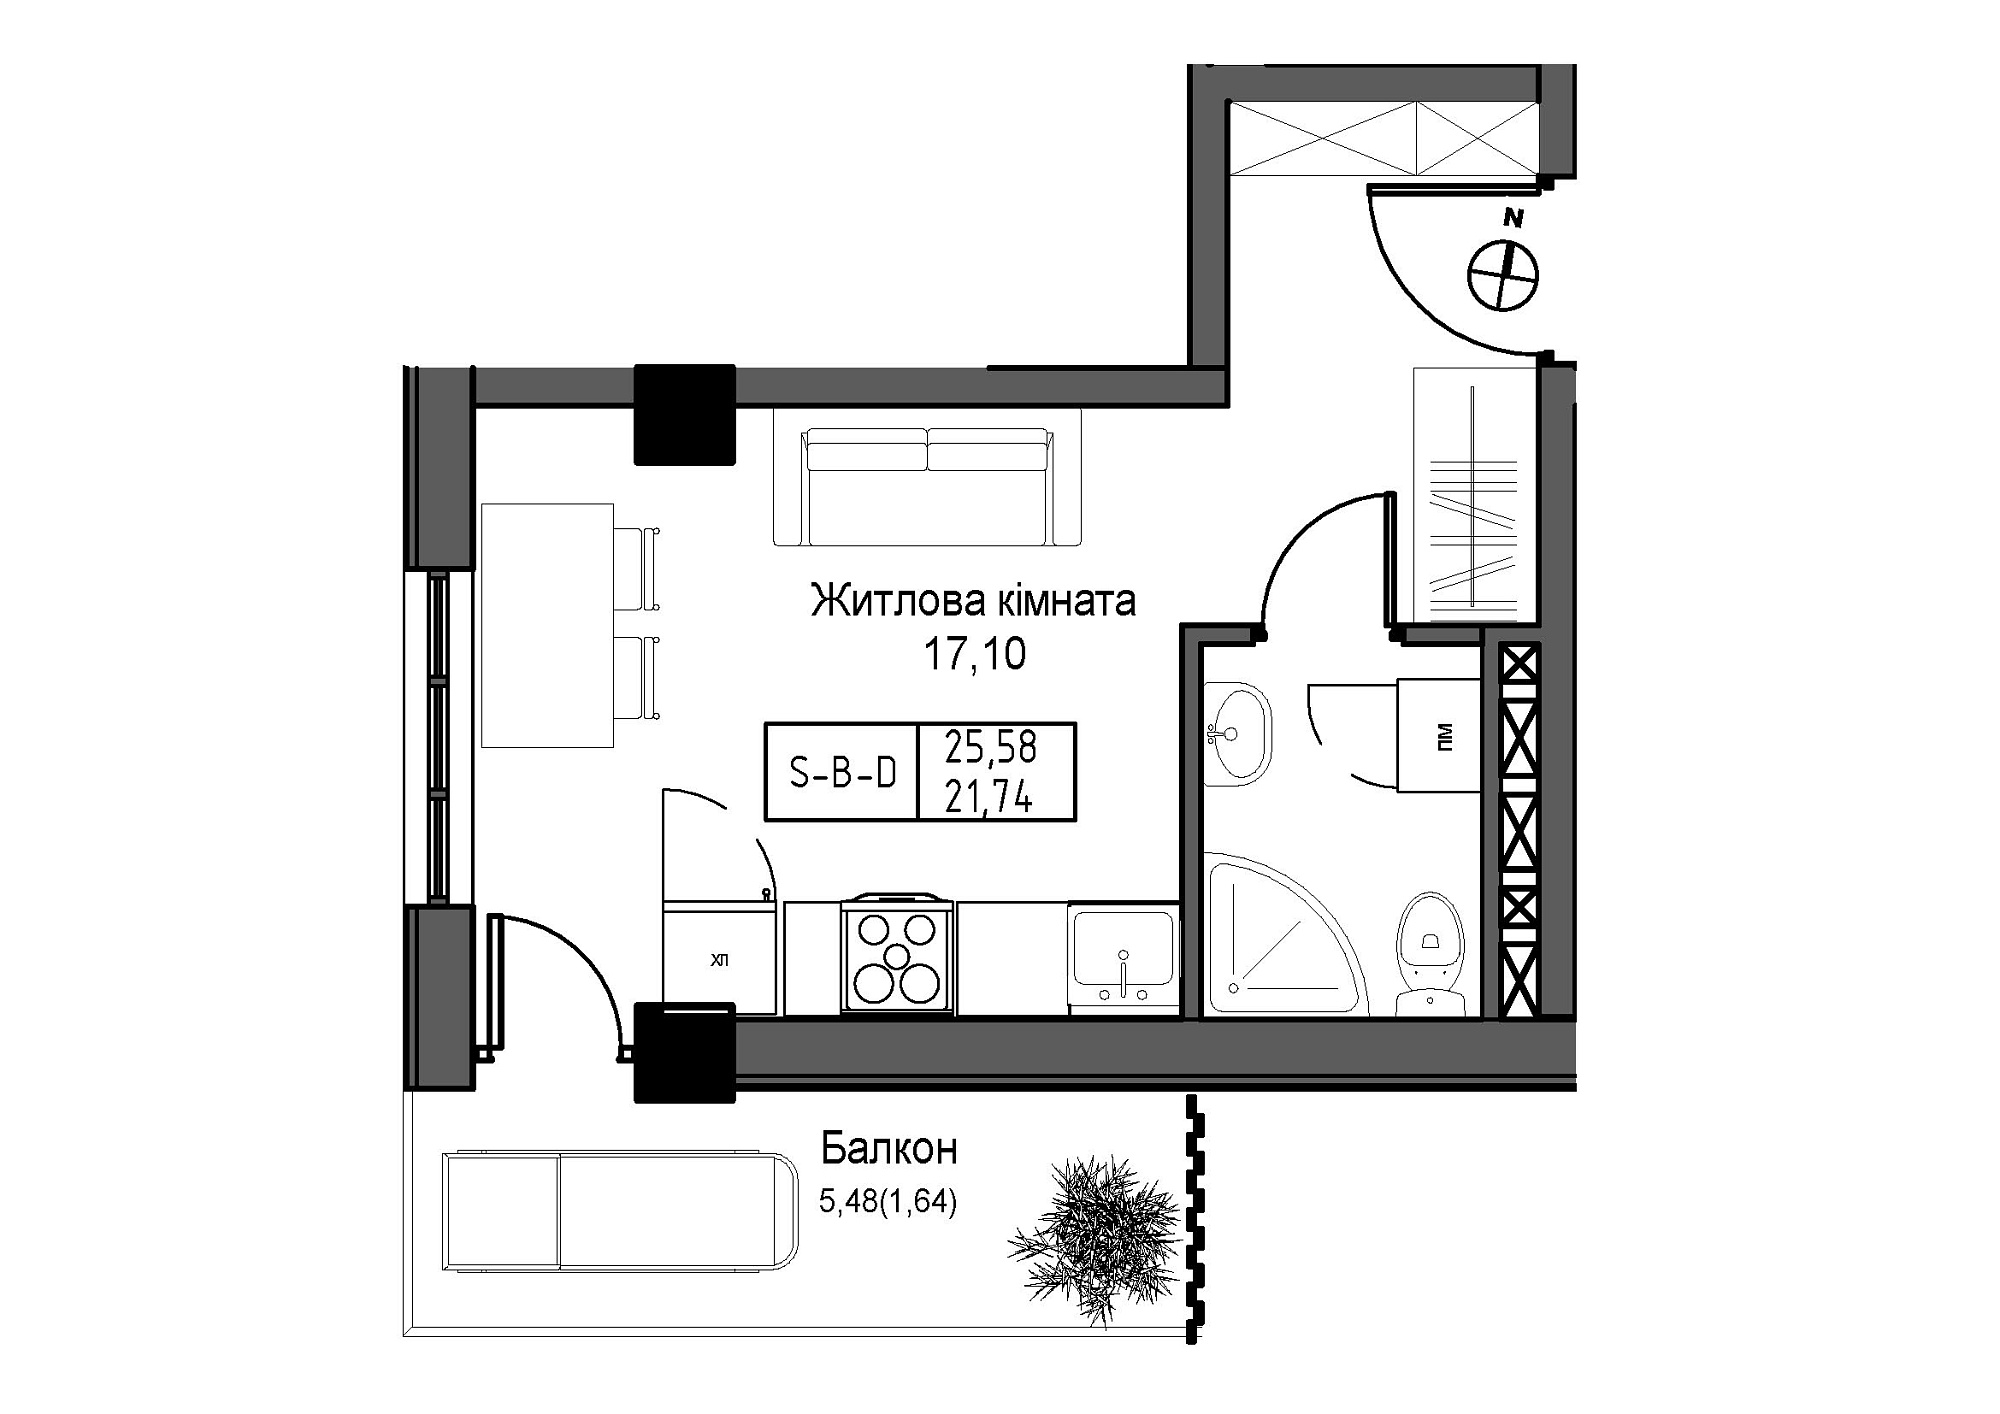 Планування Smart-квартира площею 21.74м2, UM-007-06/0010.